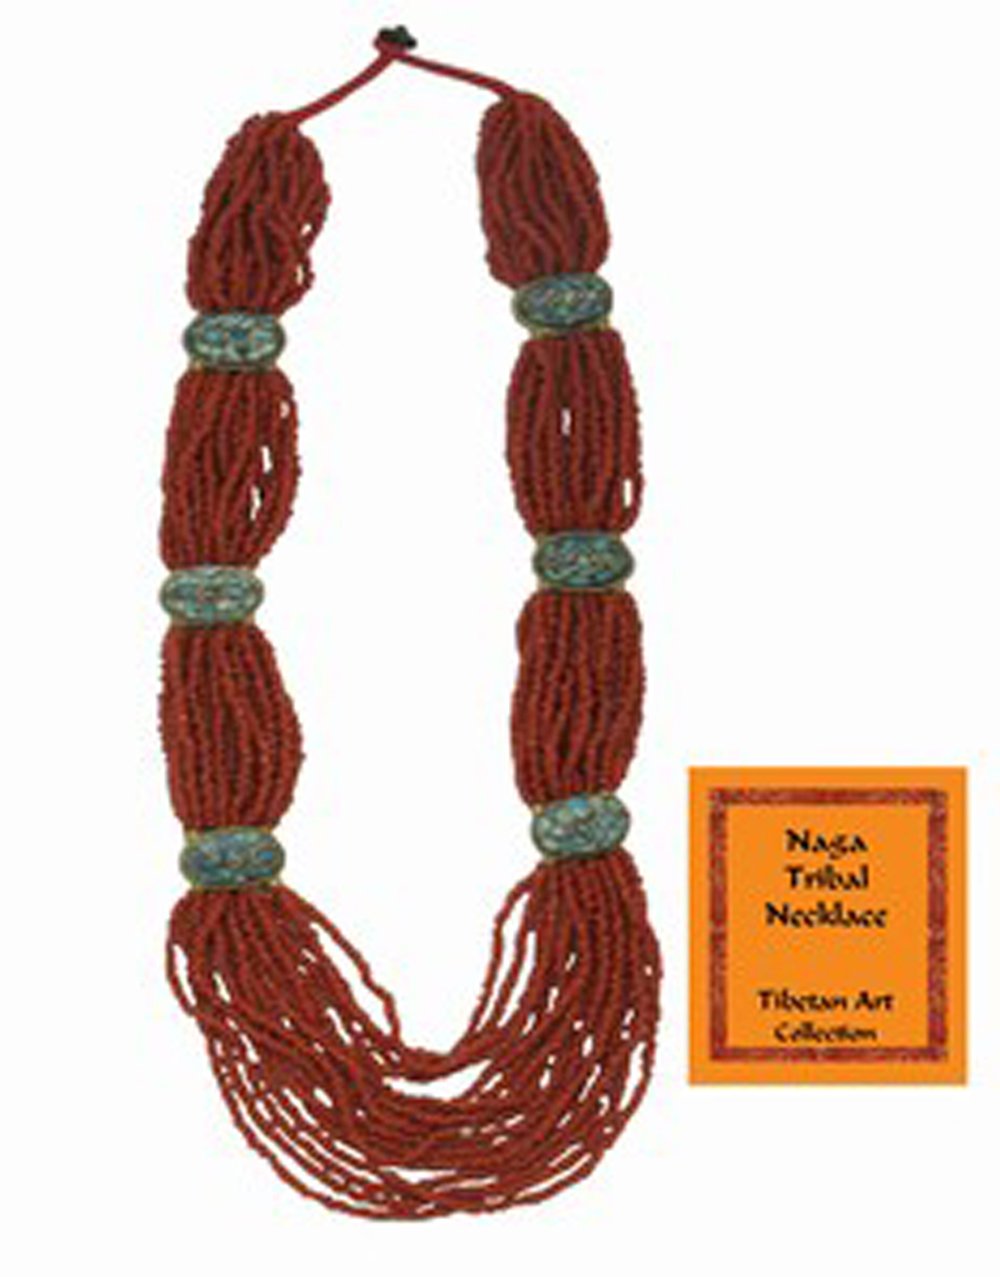 Tibetan Naga Tribal Necklace (Red)